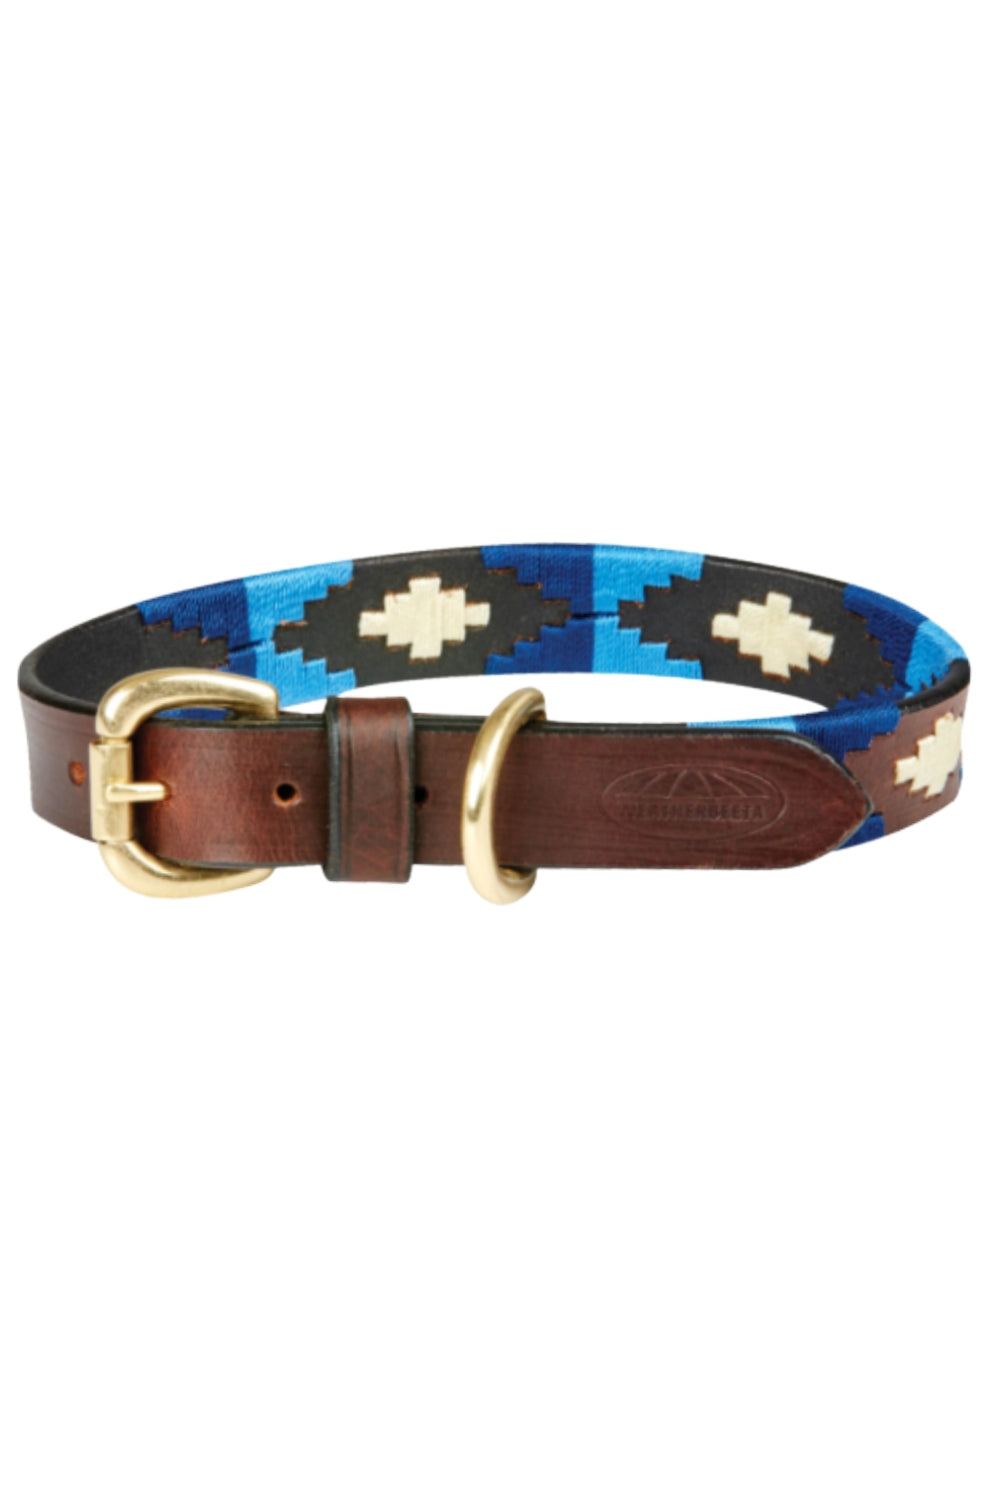 WeatherBeeta Polo Leather Dog Collar in Cowdray Brown/Blue/Blue 